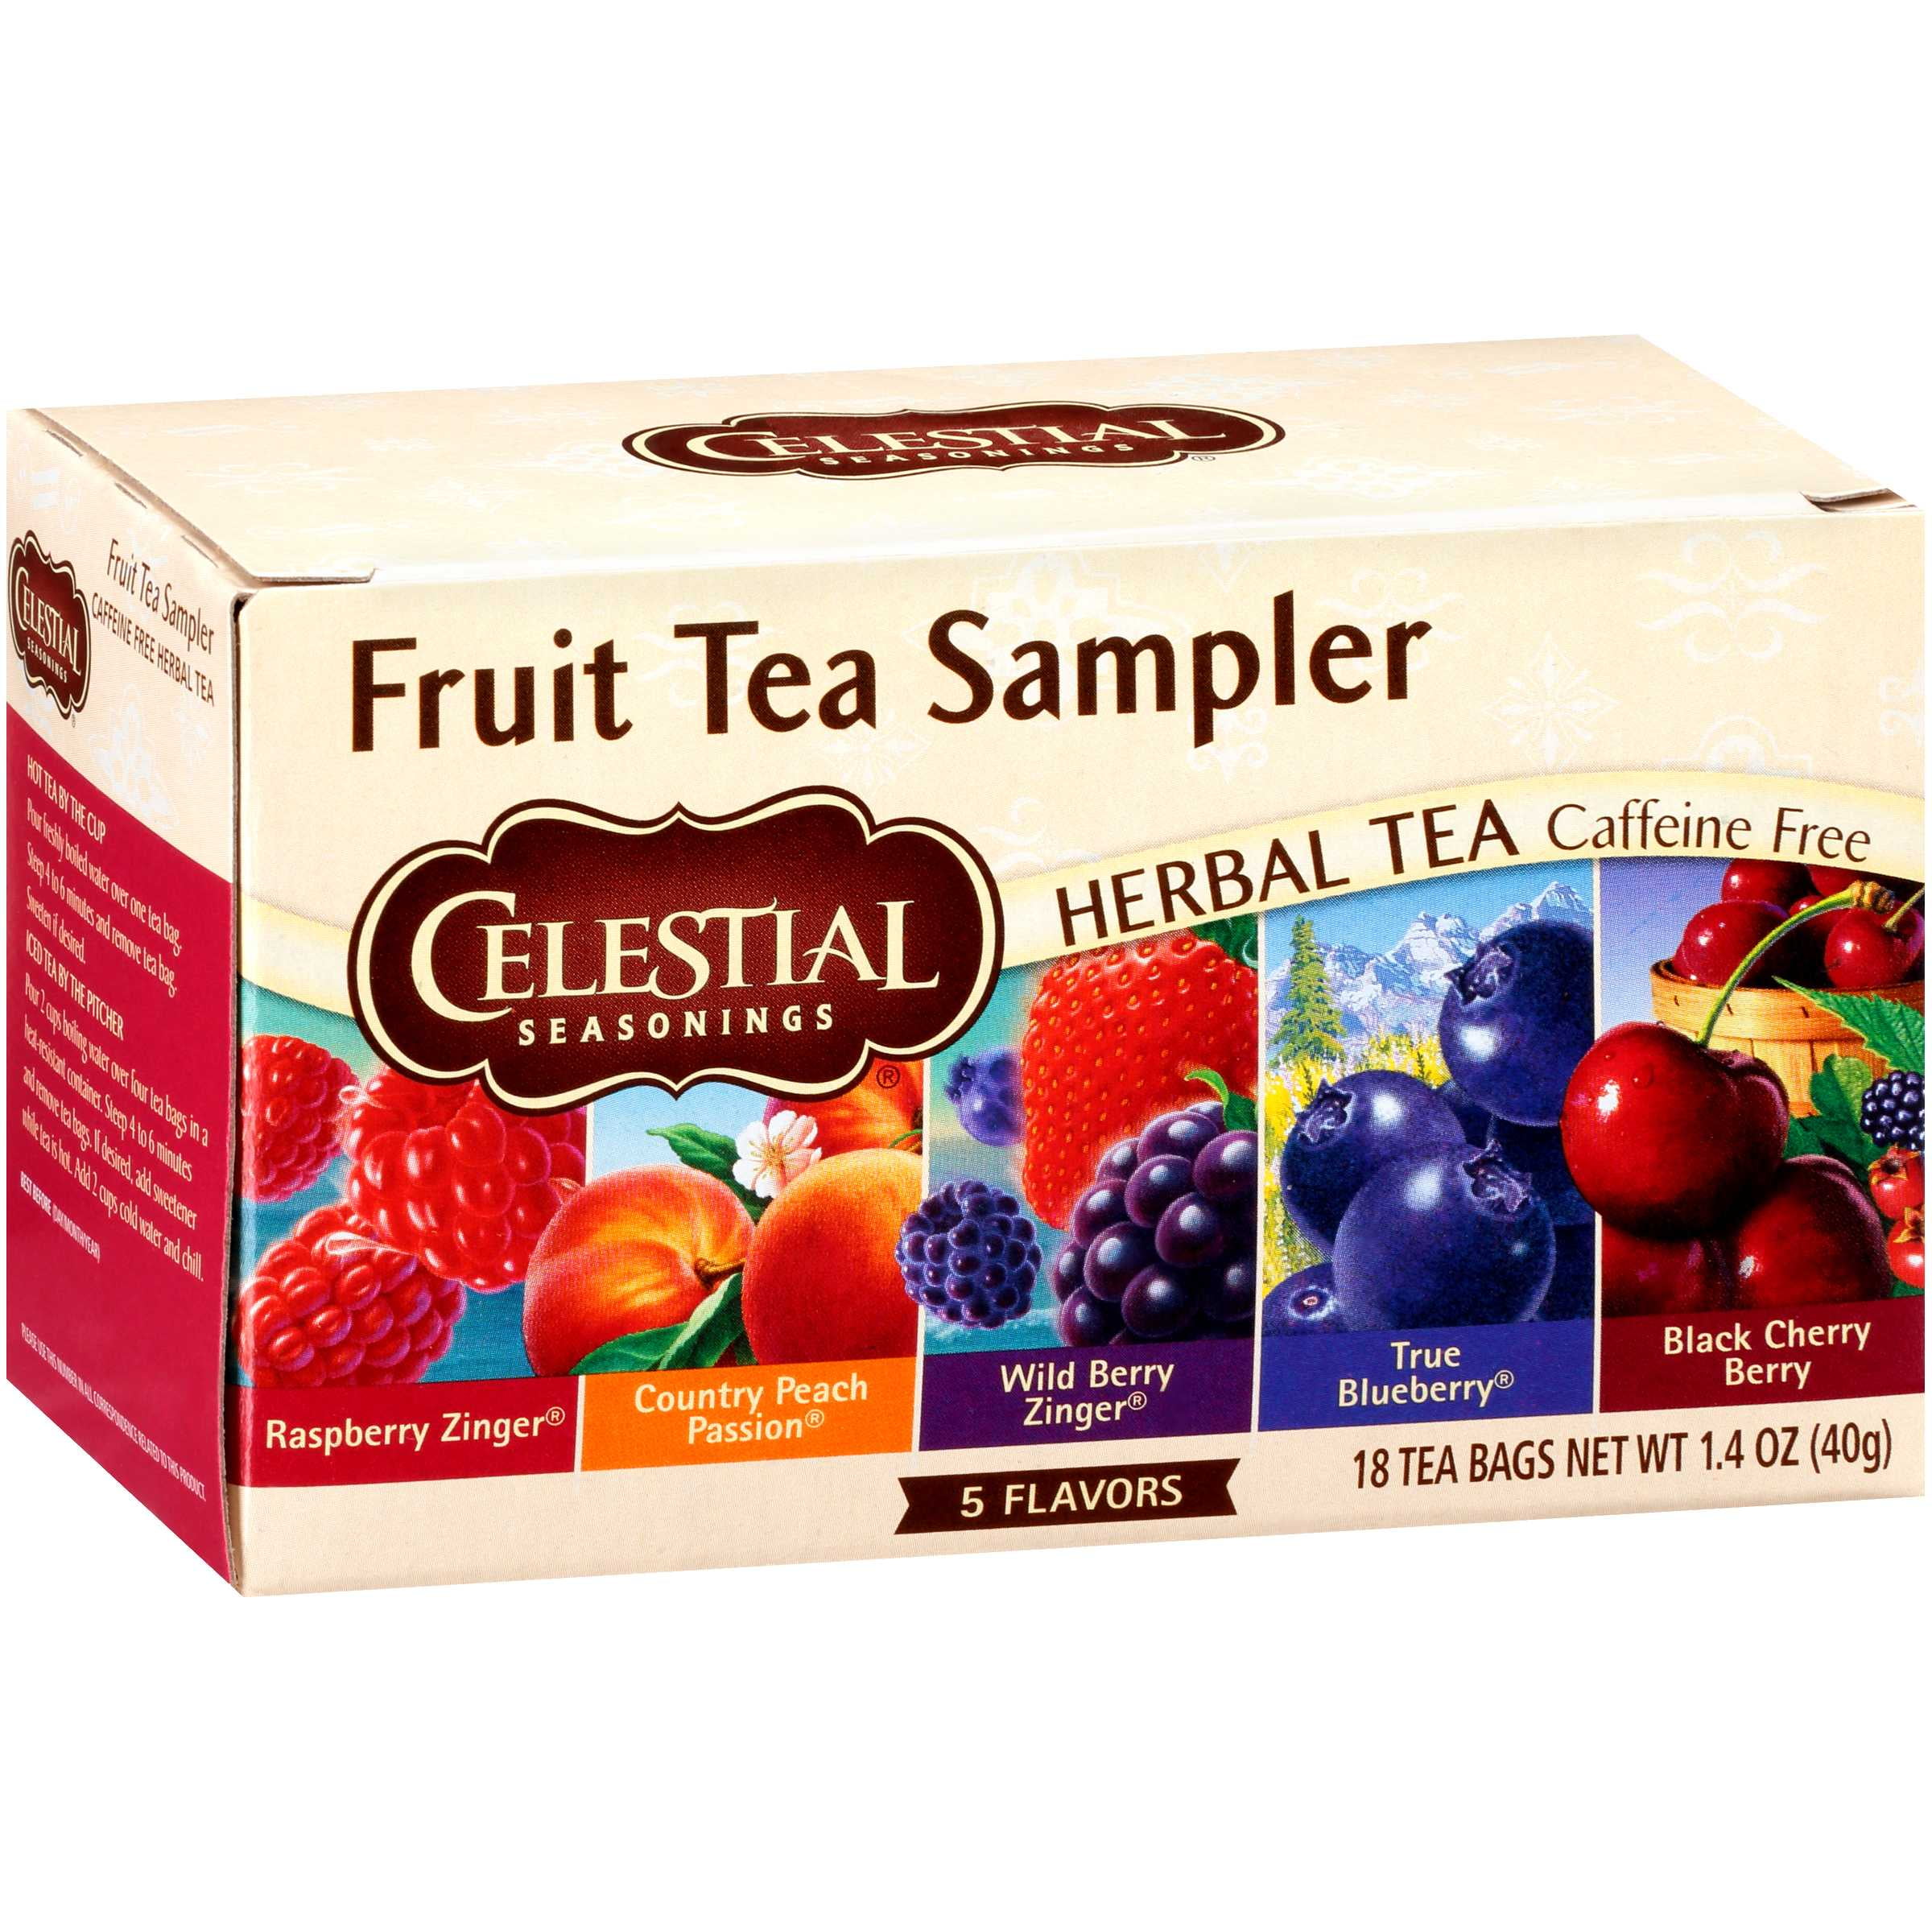 Free herbal tea samples